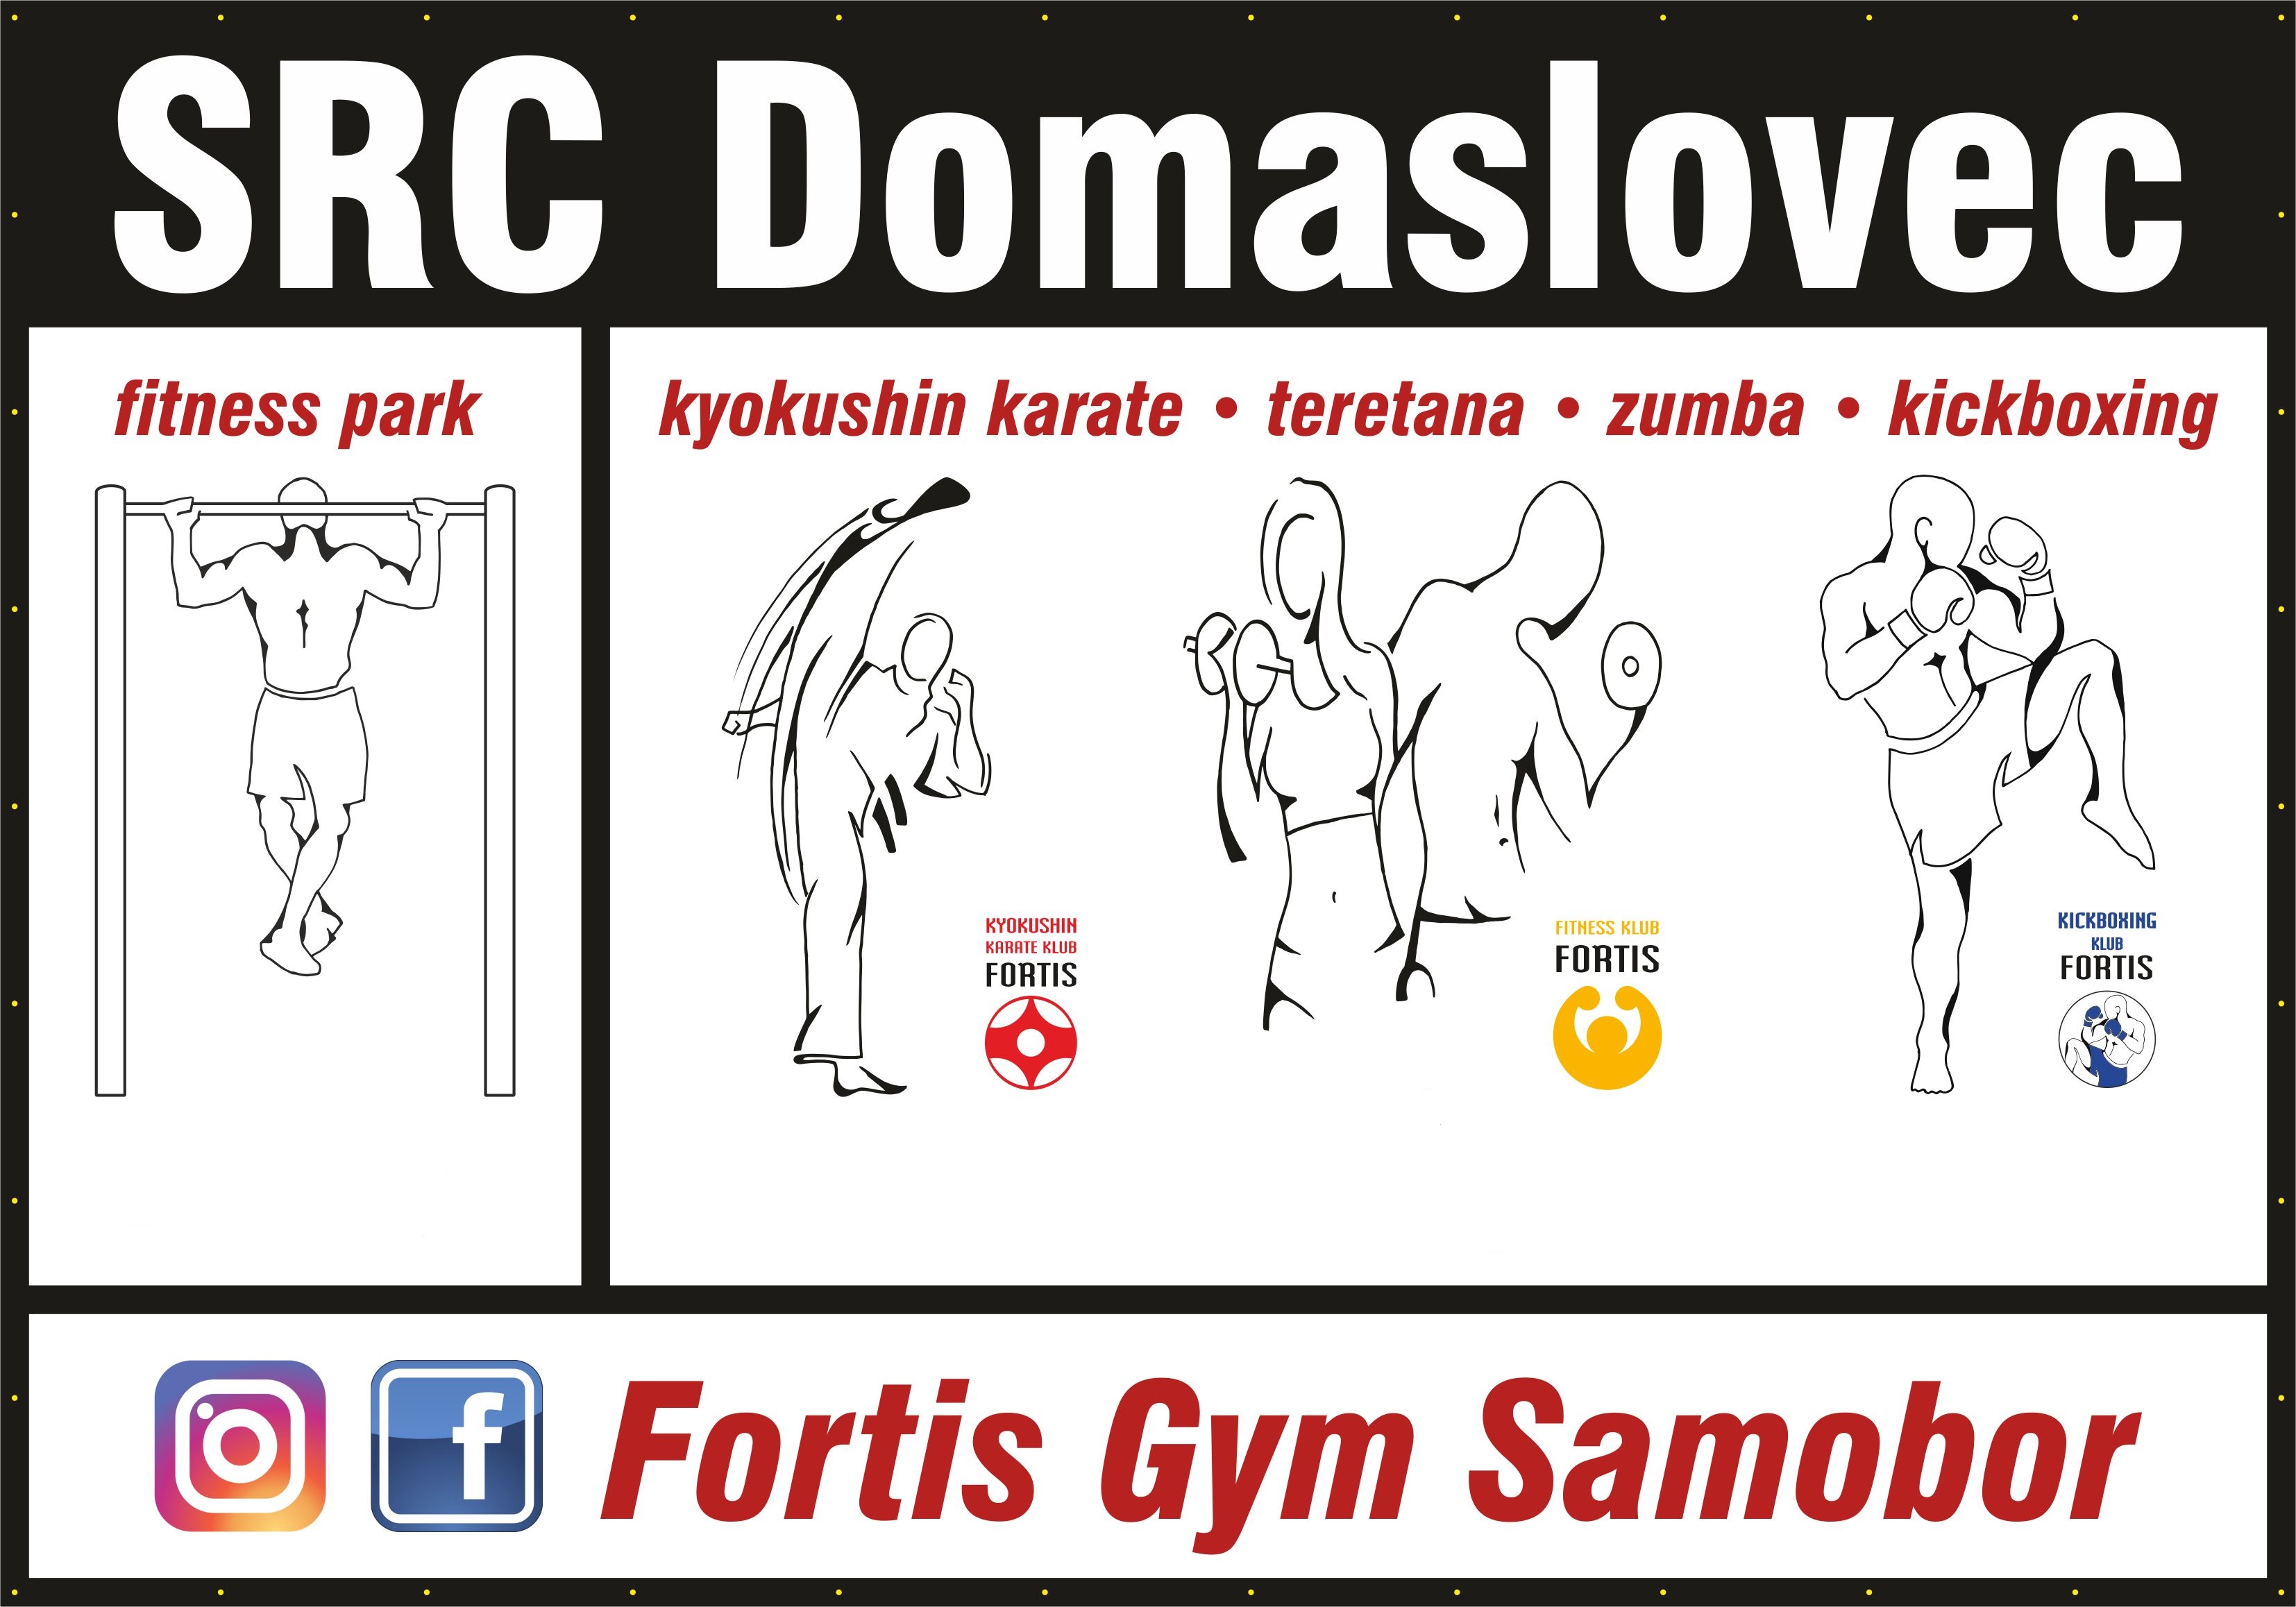 SRC Domaslovec BANER 01 - Copy